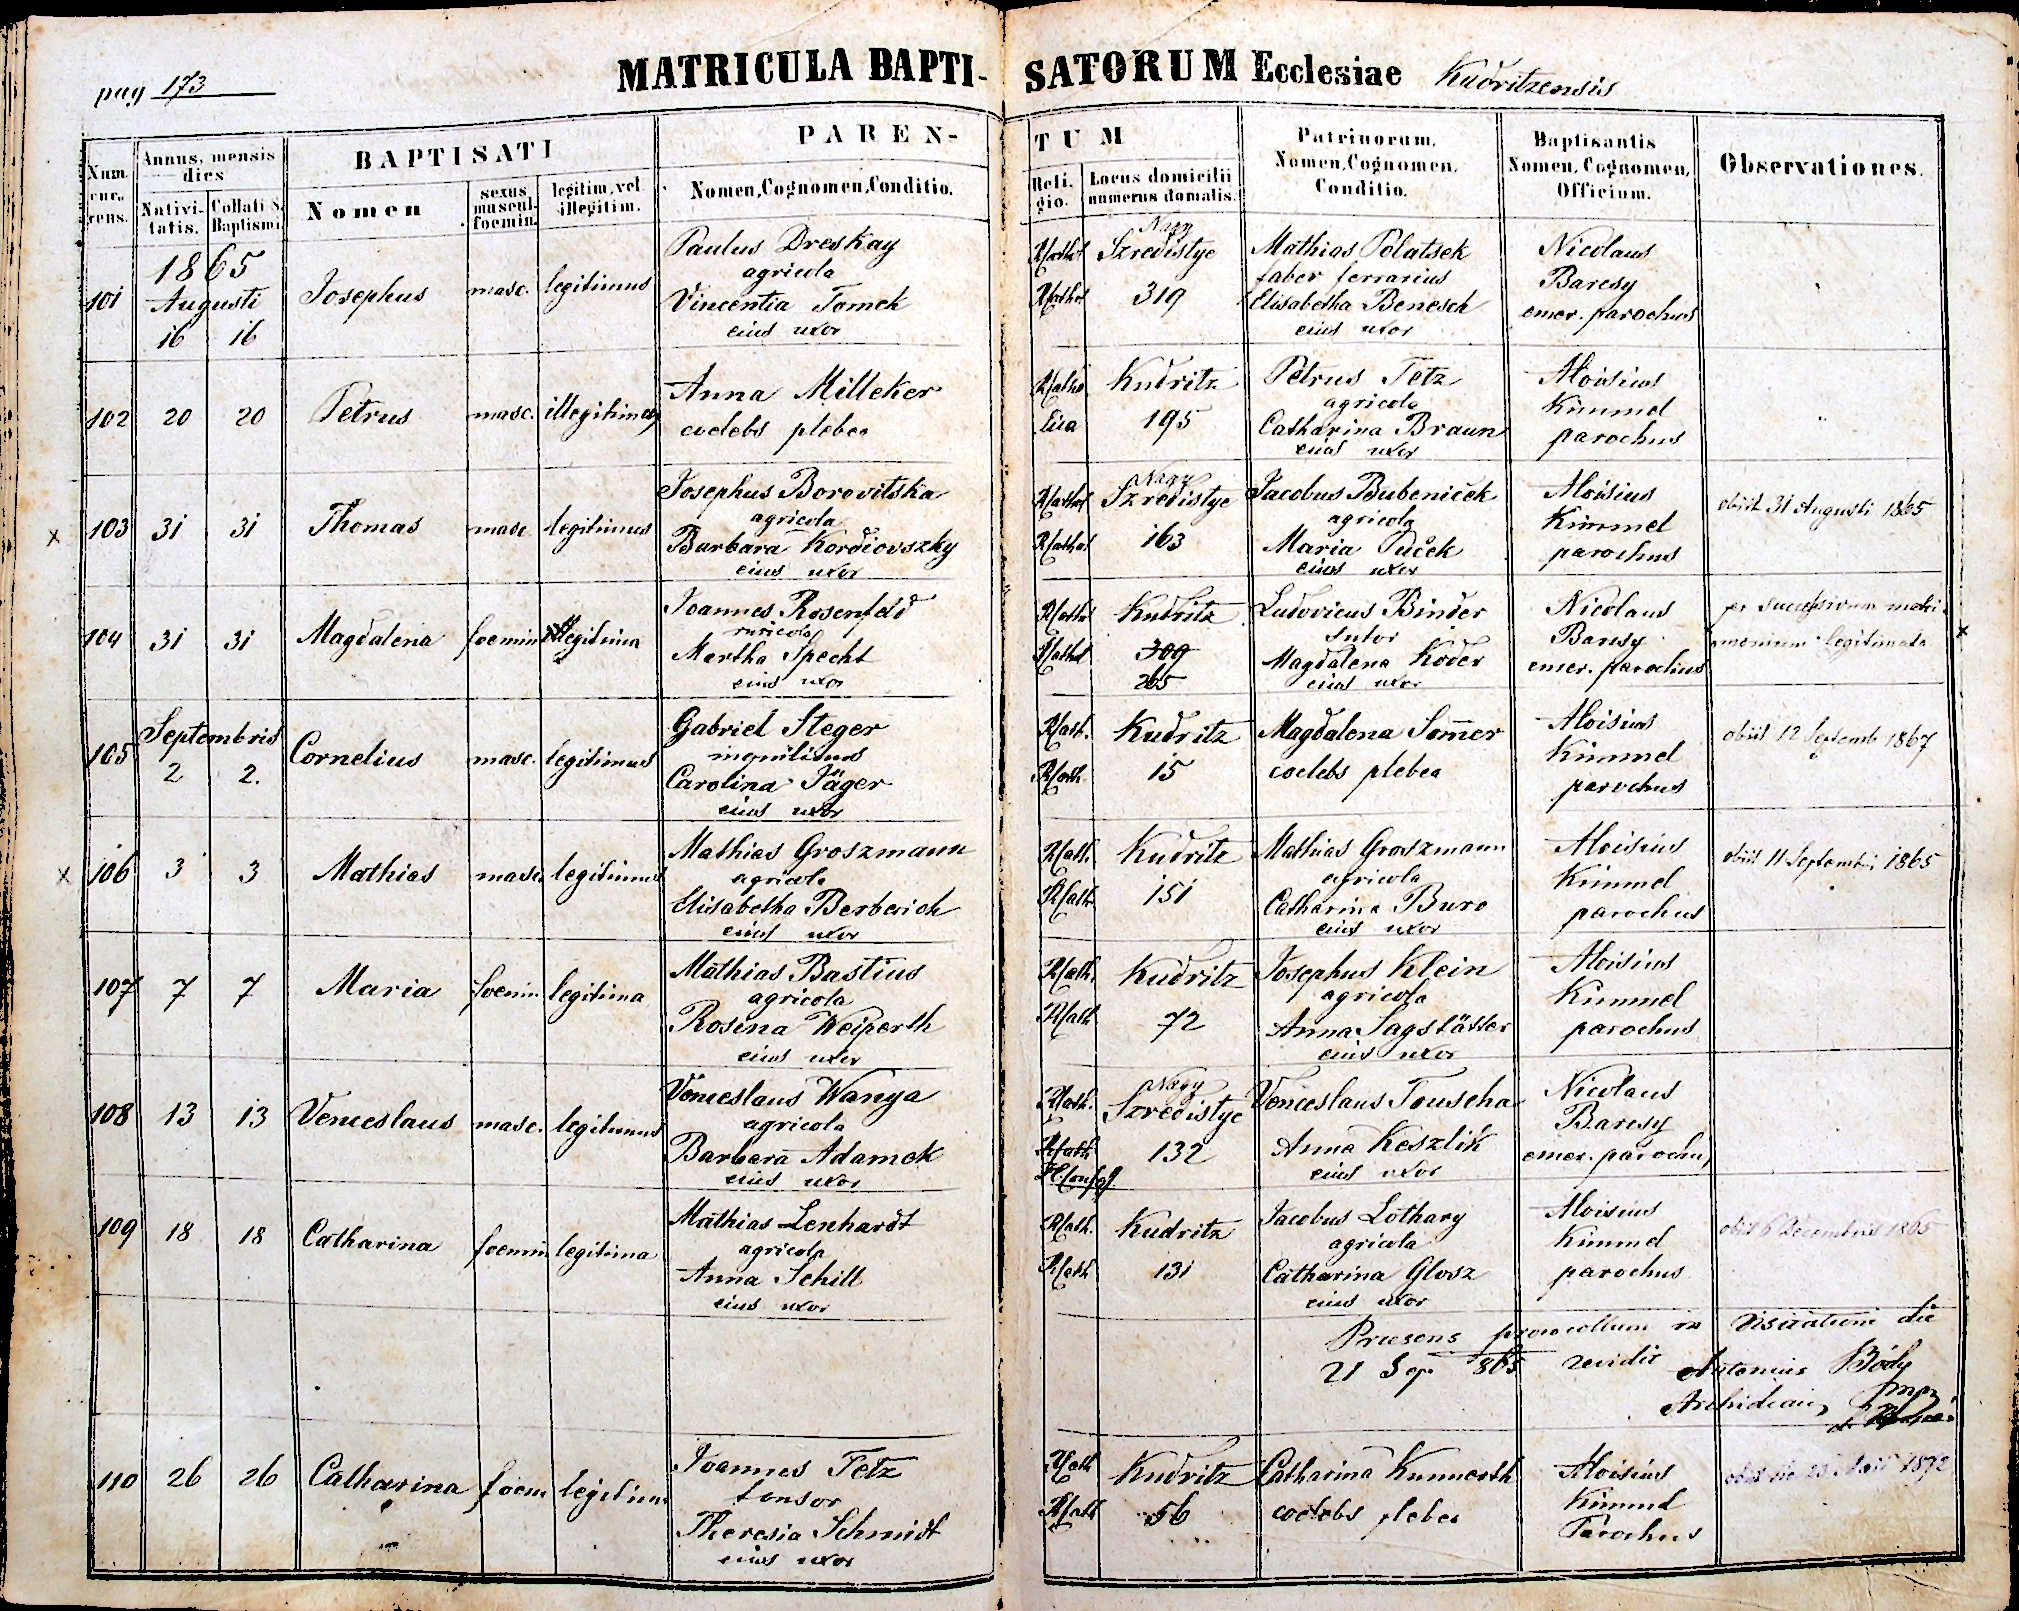 images/church_records/BIRTHS/1852-1870B/173